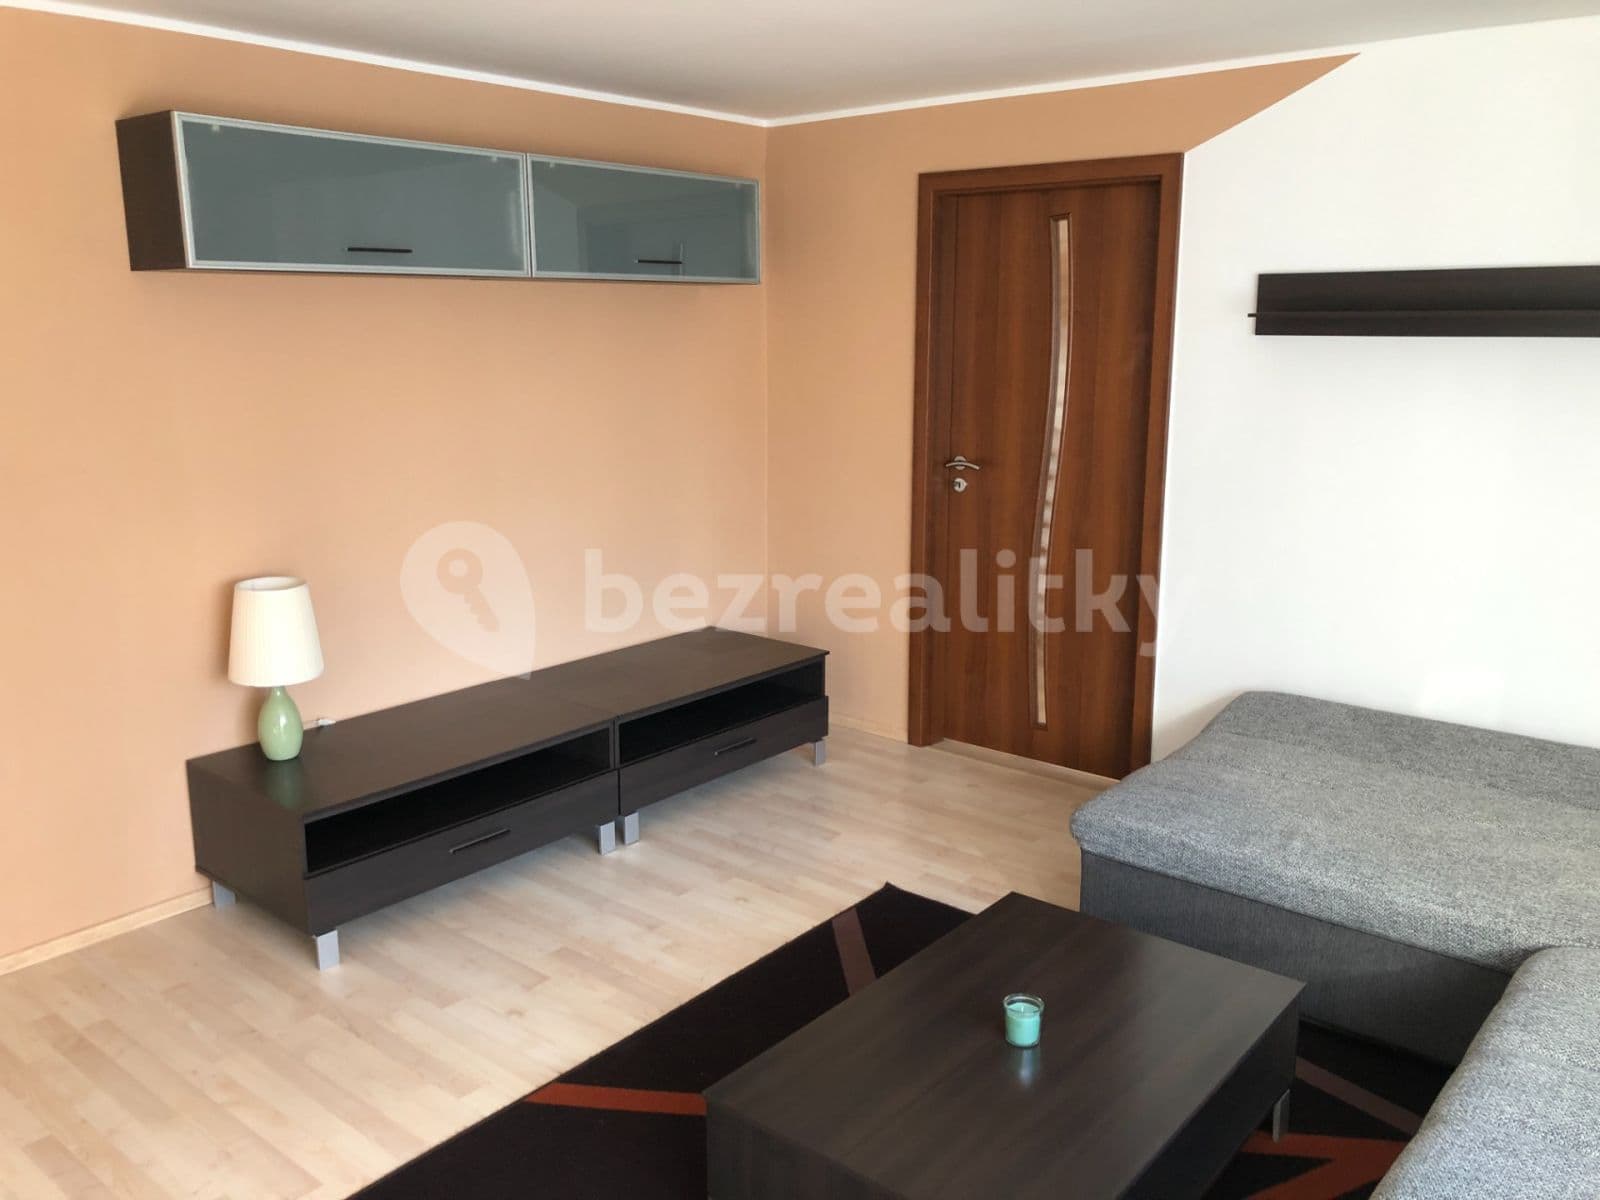 3 bedroom flat to rent, 80 m², Tvrdého, Prague, Prague